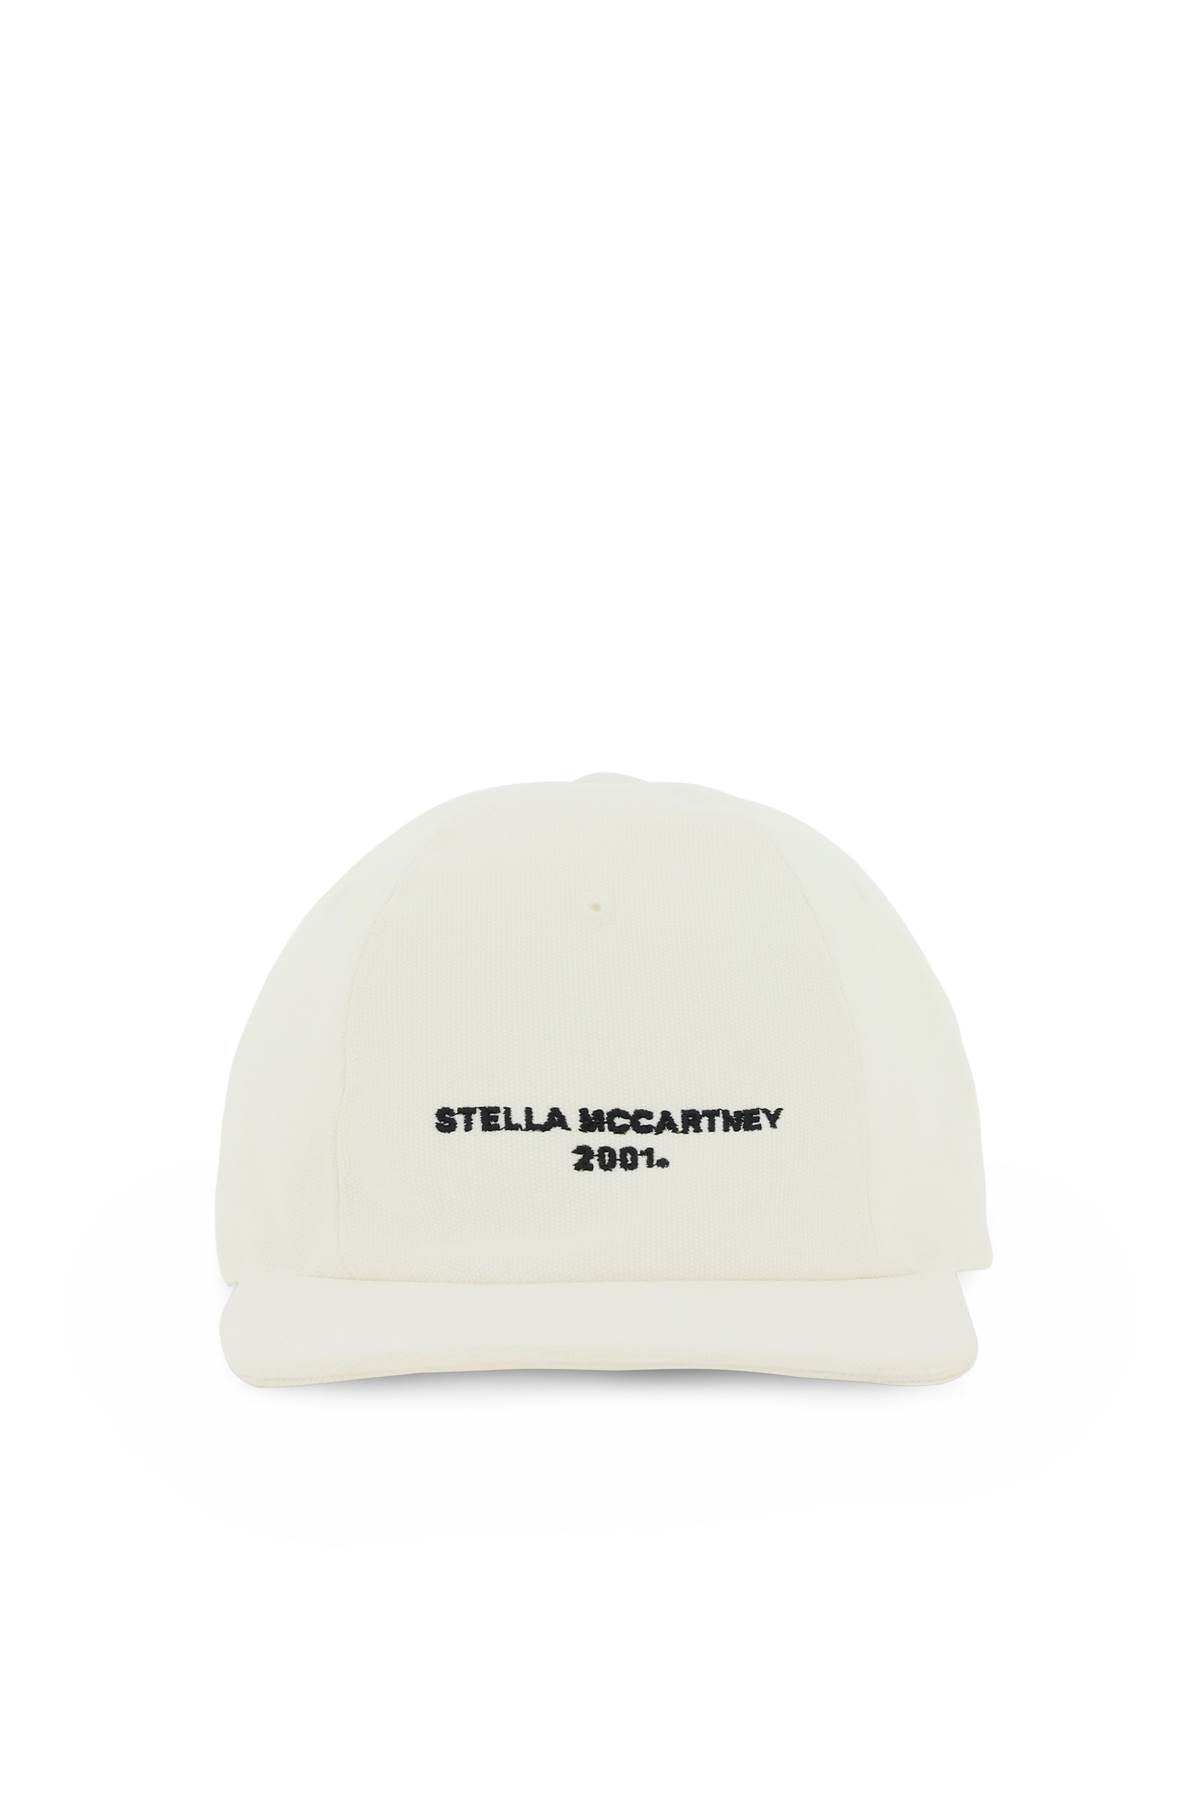 Stella McCartney STELLA MCCARTNEY Hat white 570194WP00231830